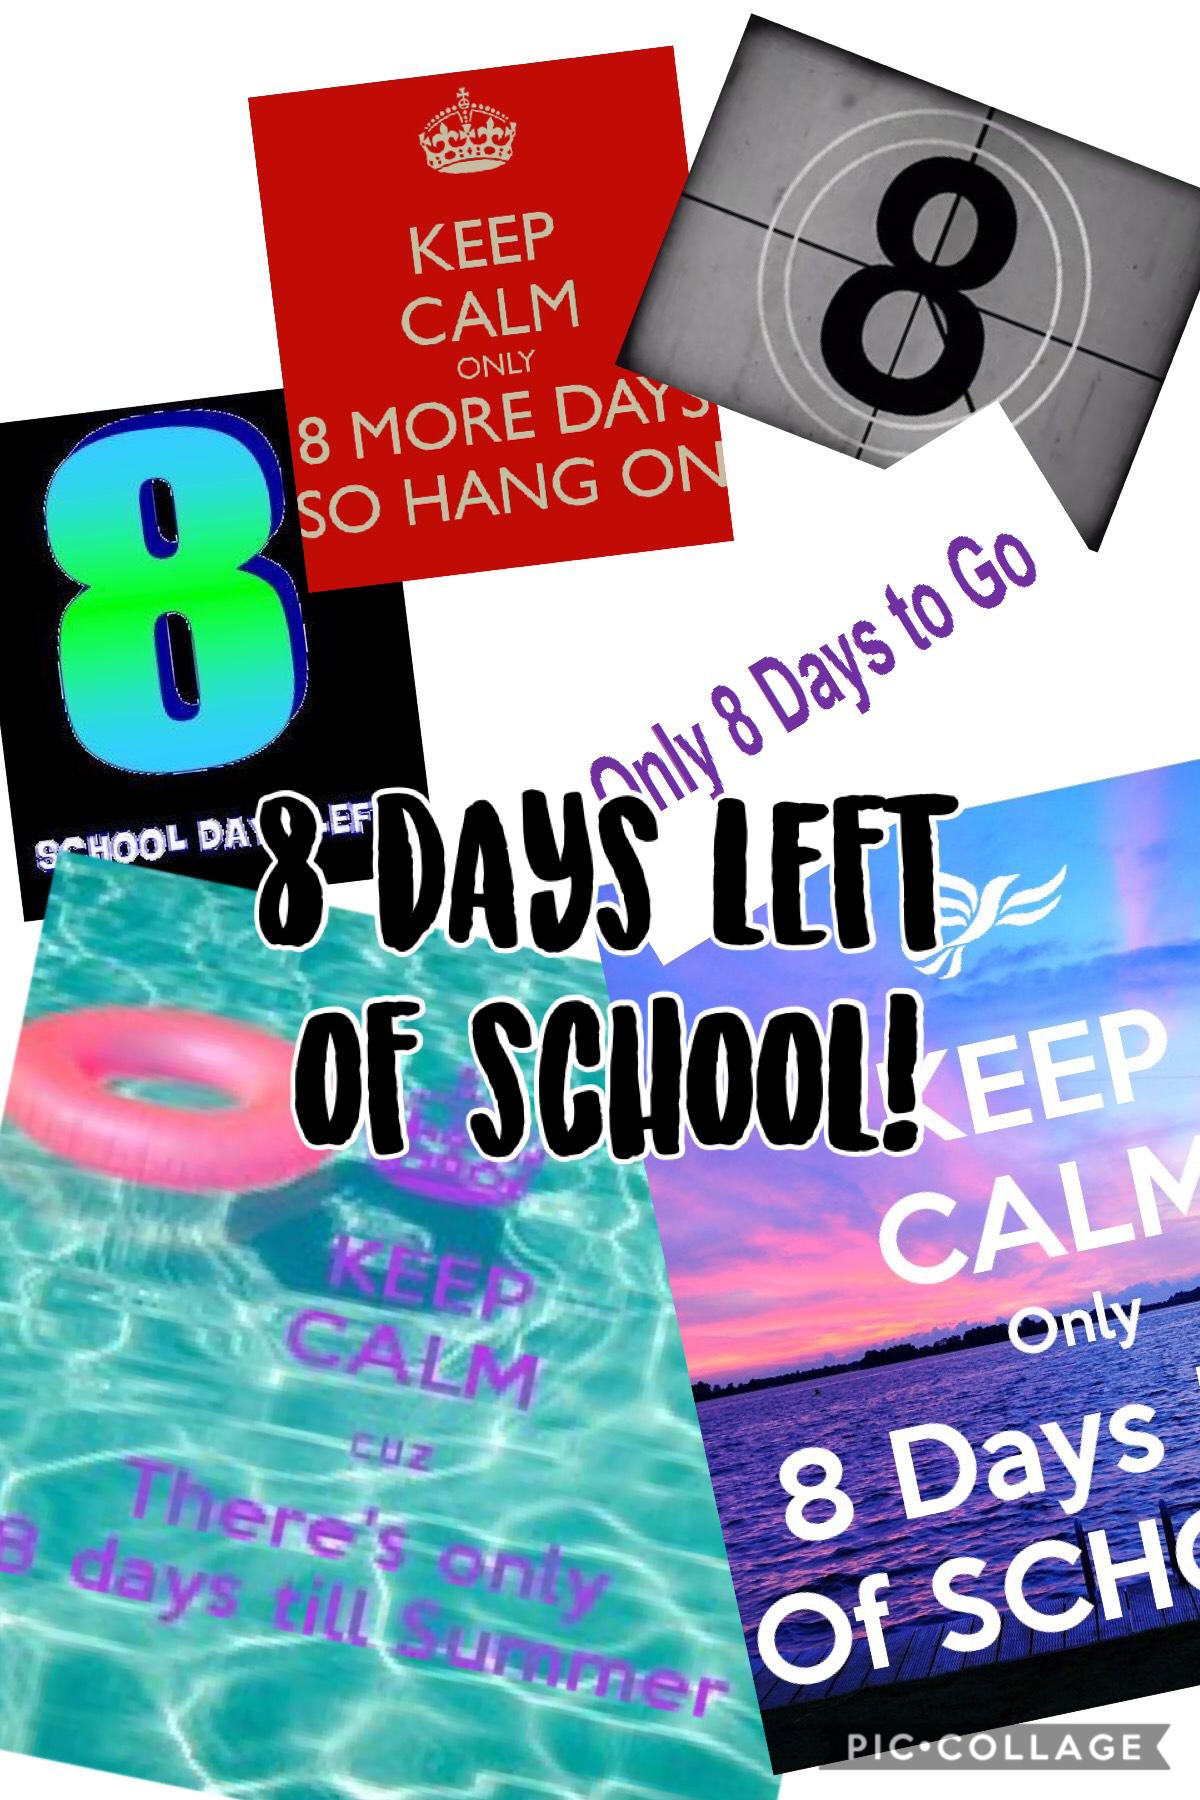 8 days left until summer vacation!
